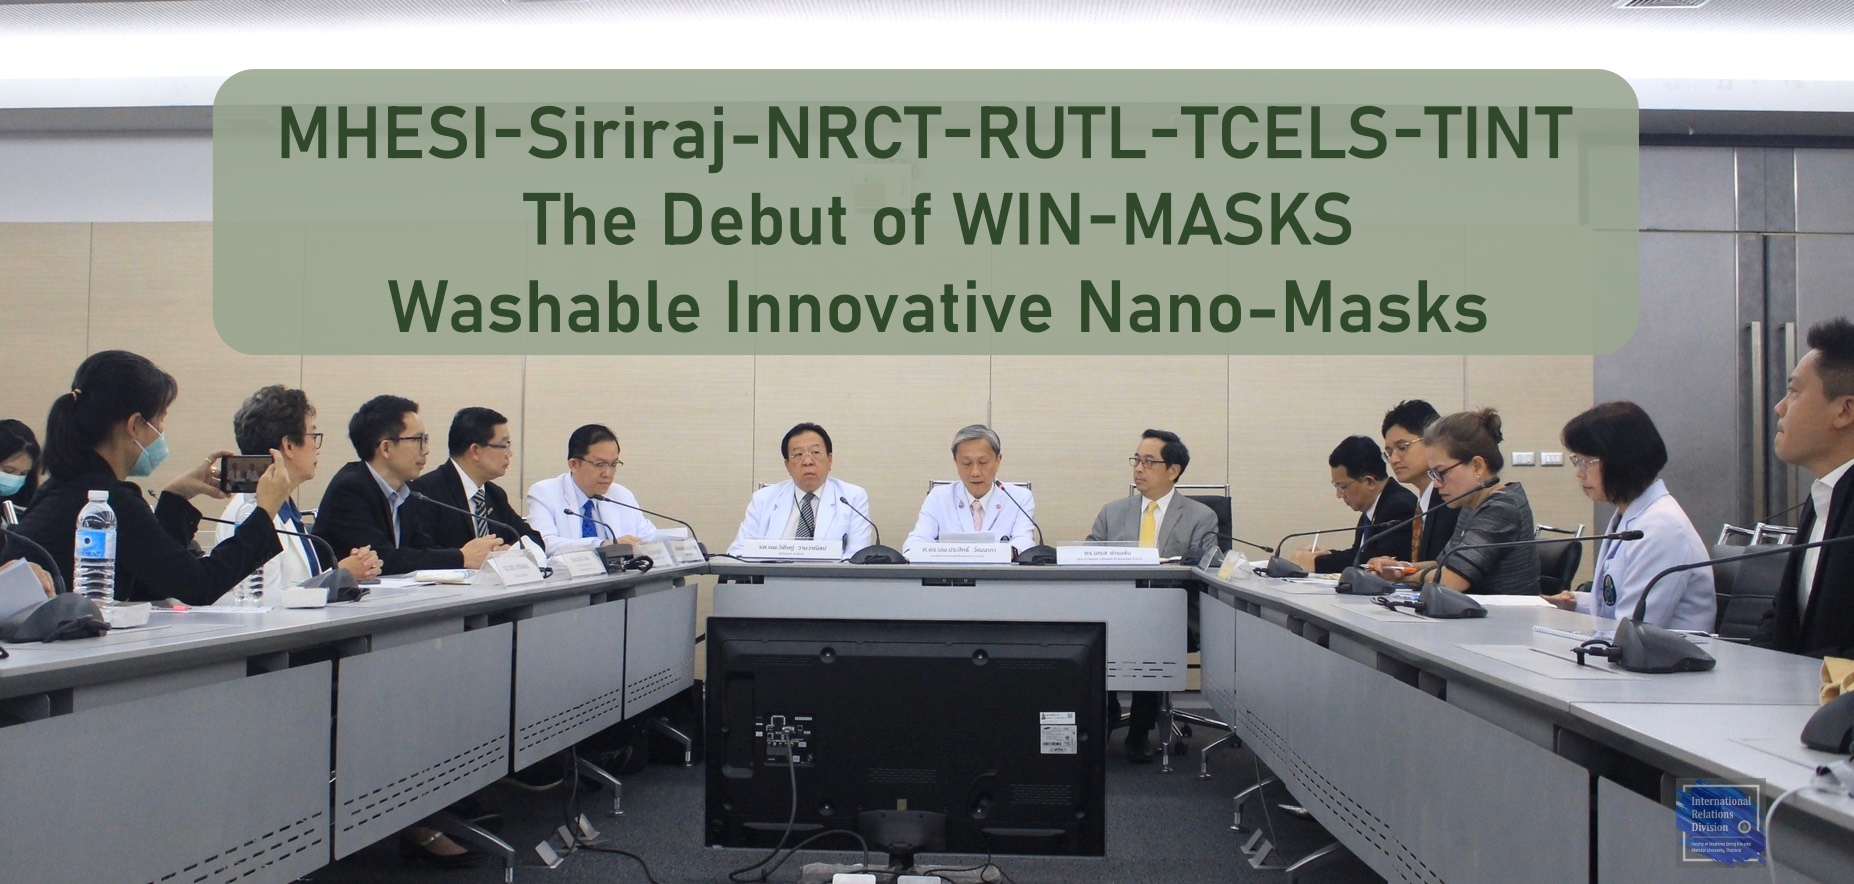 The Press Conference “WIN-Masks: Washable Innovative Nano-Masks”